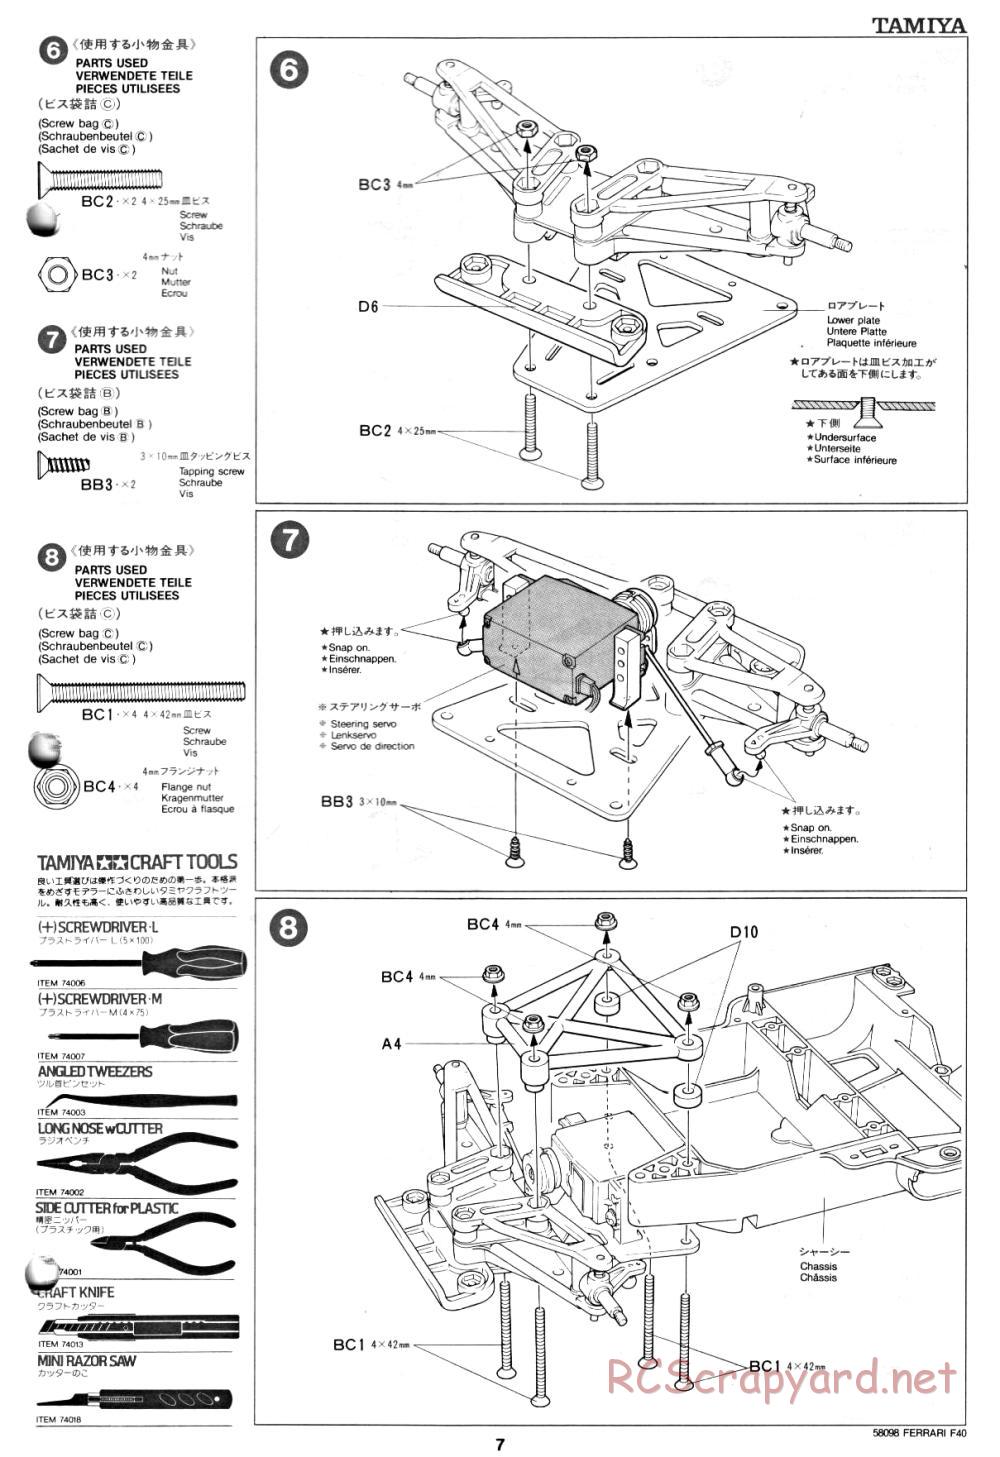 Tamiya - Ferrari F40 - 58098 - Manual - Page 7